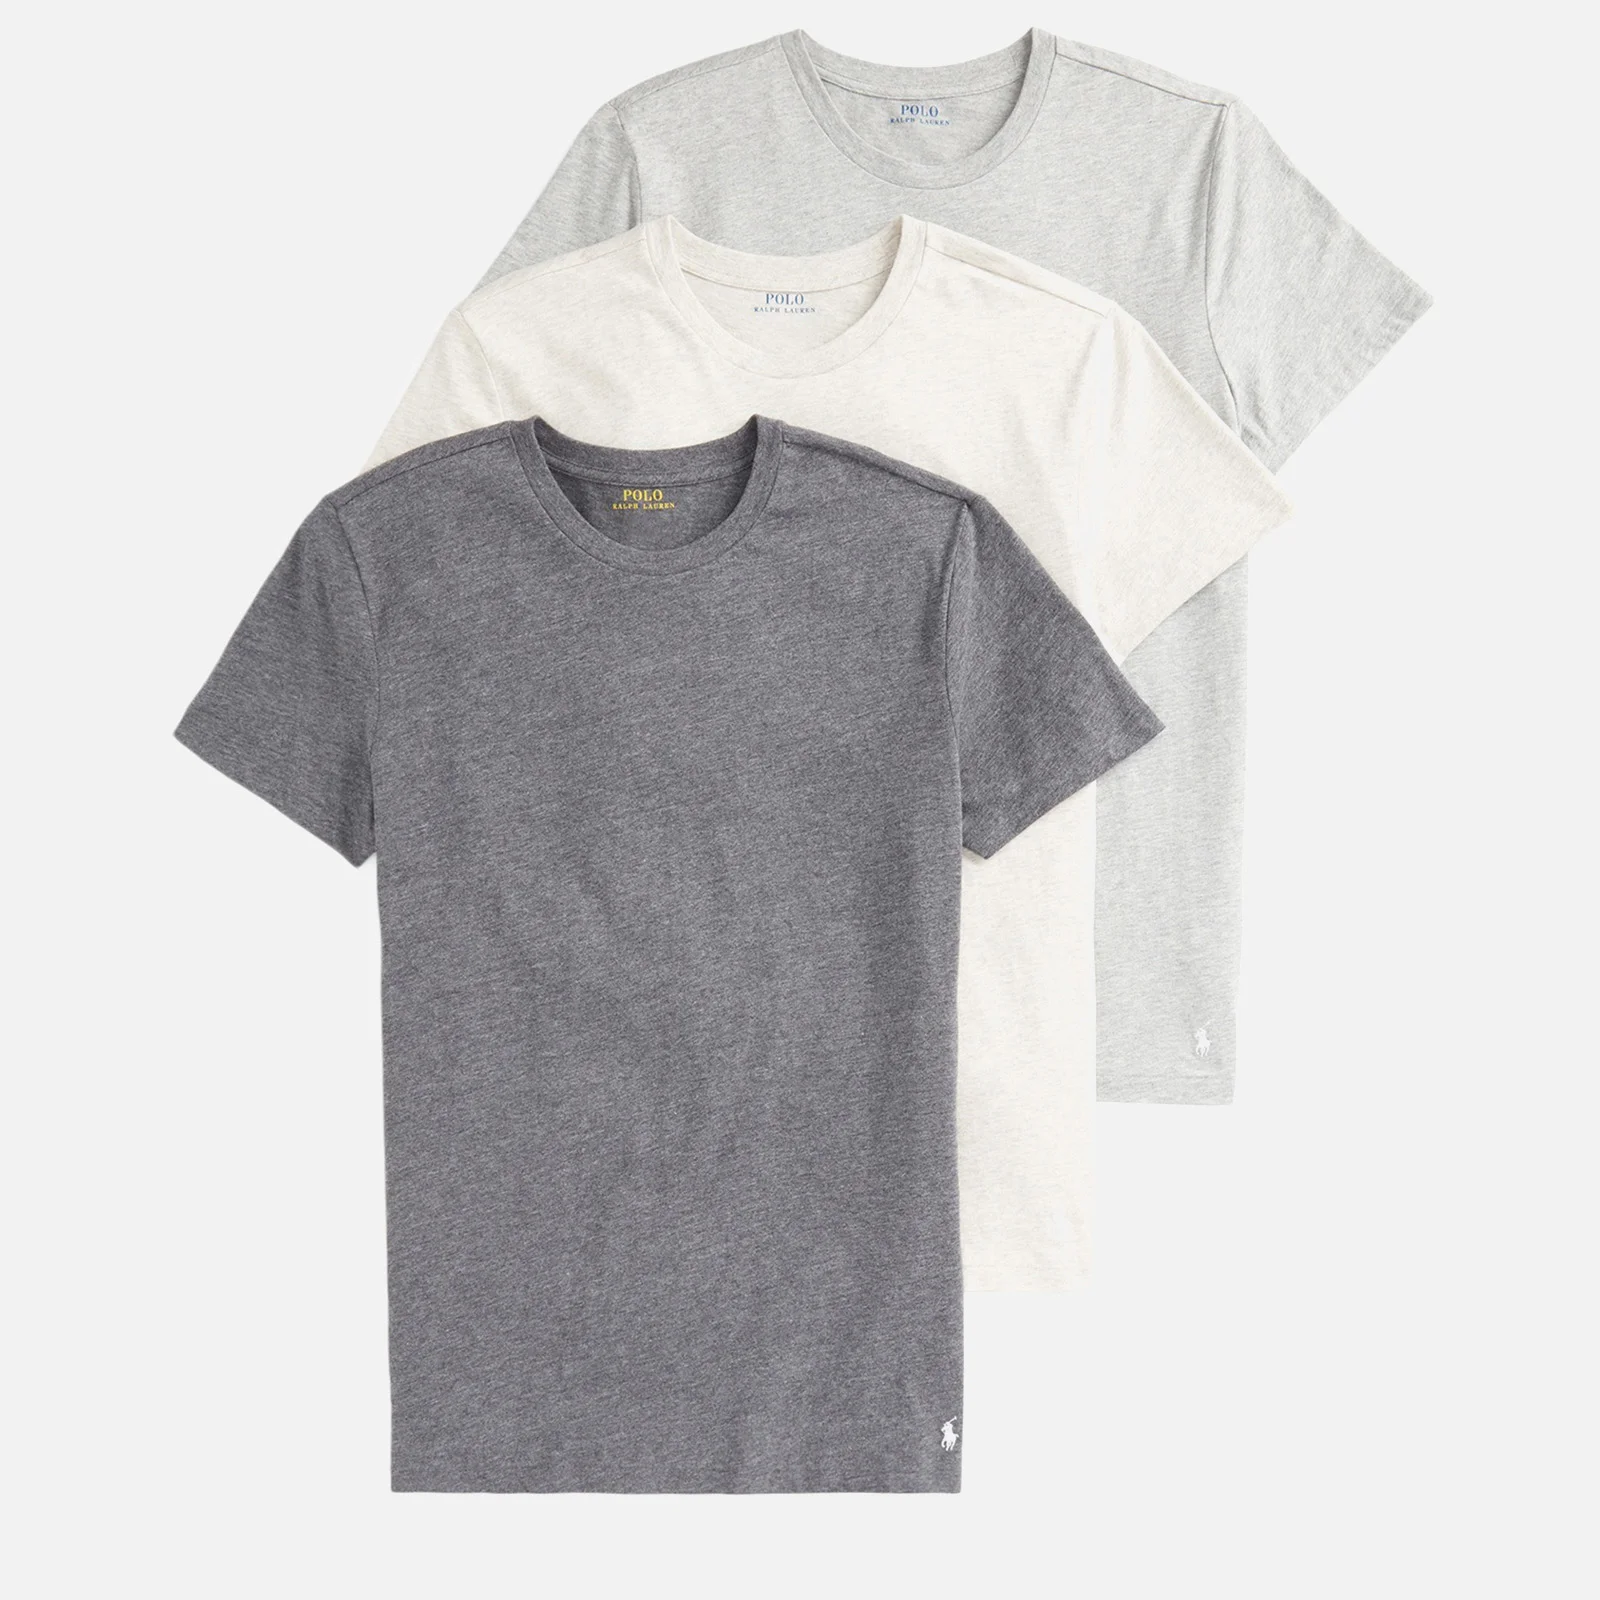 Polo Ralph Lauren Men's 3 Pack Crewneck T-Shirts - Andover Heather/Lt Sp Grey/Charcoal Grey - S Image 1